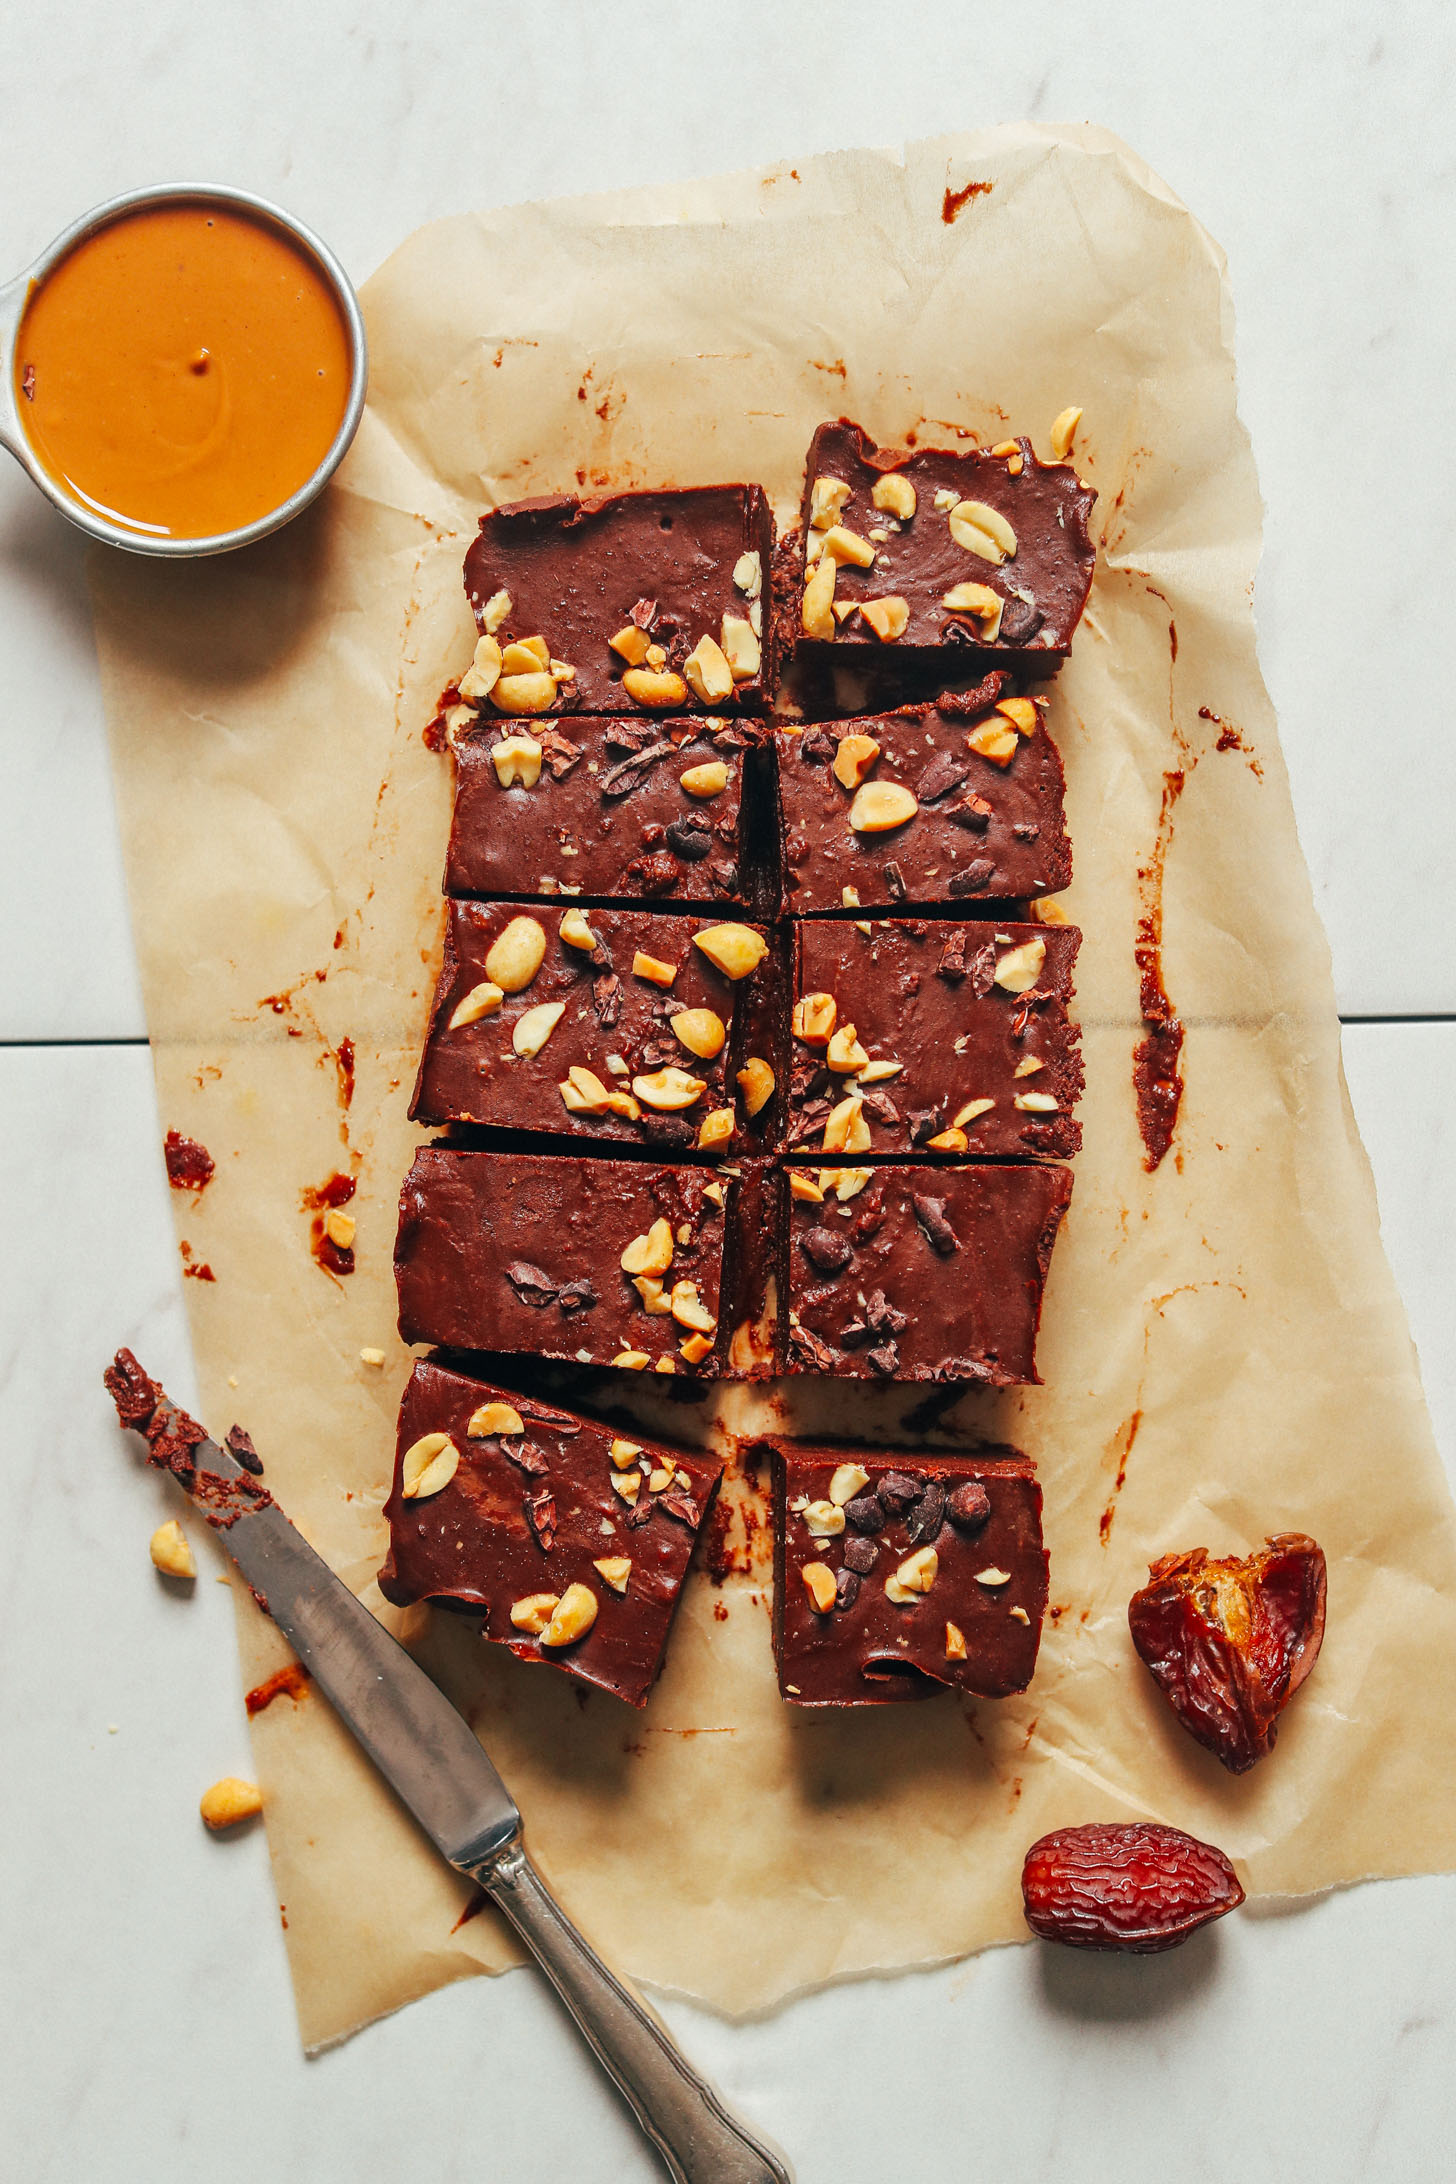 Freshly sliced squares of our 4-Ingredient Vegan Chocolate Peanut Butter Fudge recipe